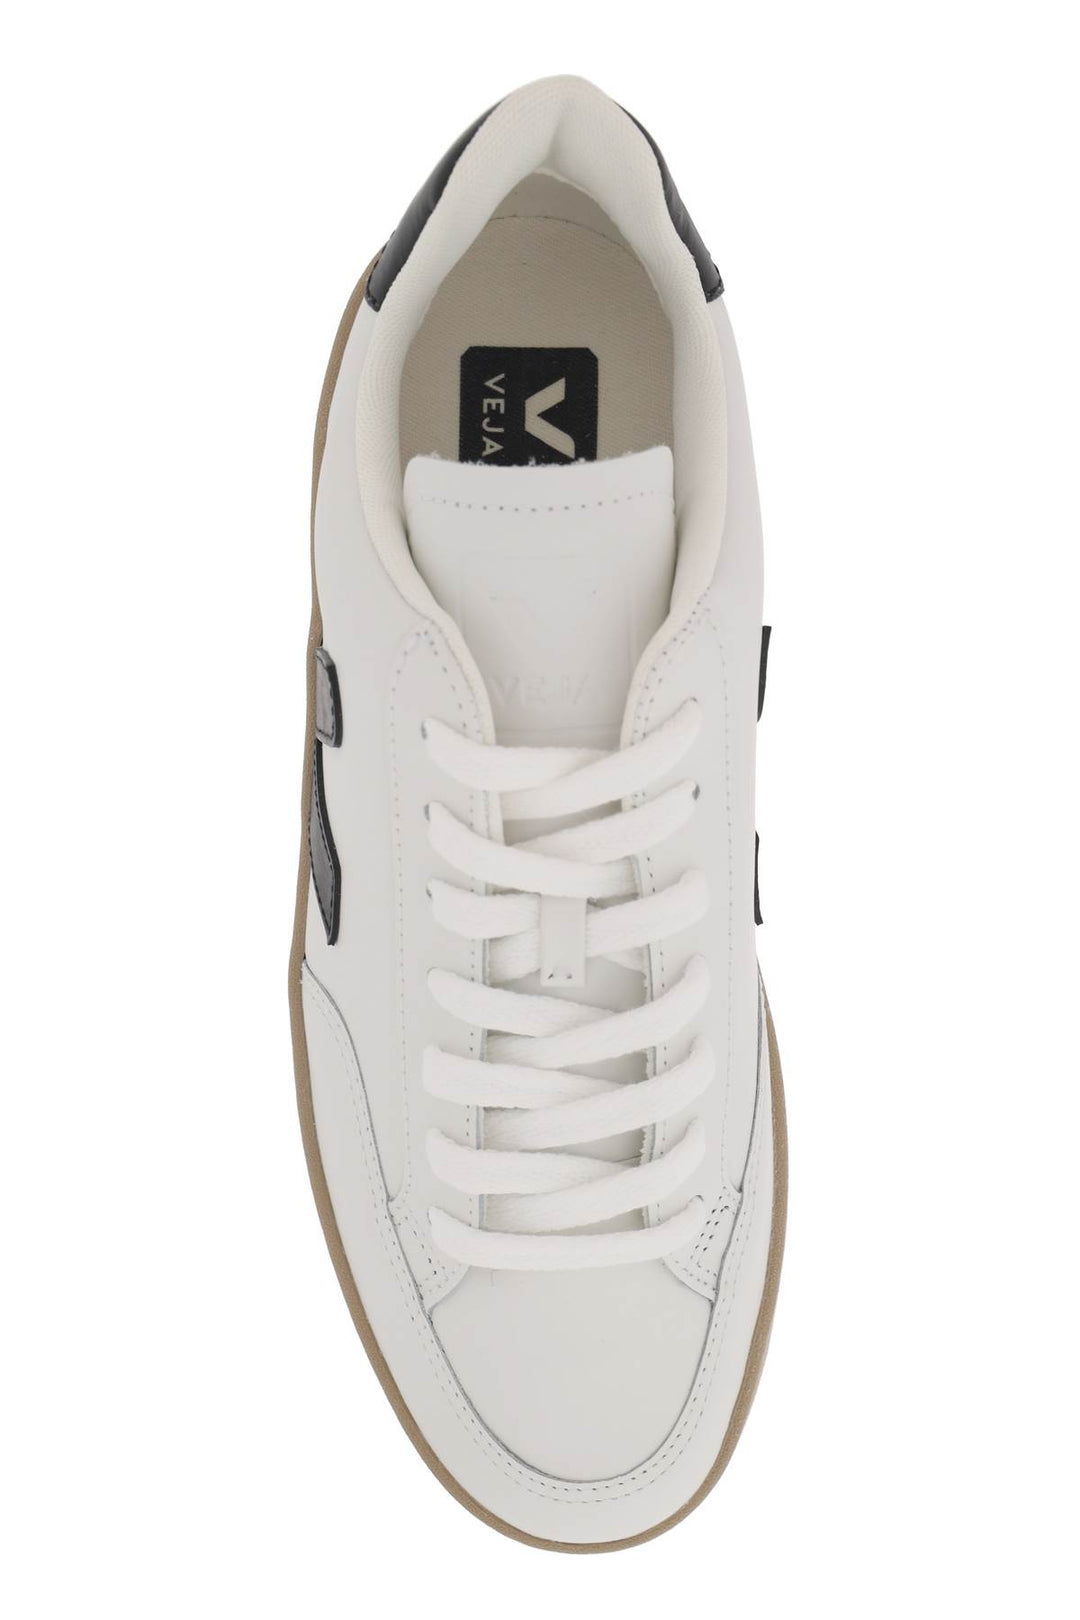 Veja Leather V 12 Sneakers   White